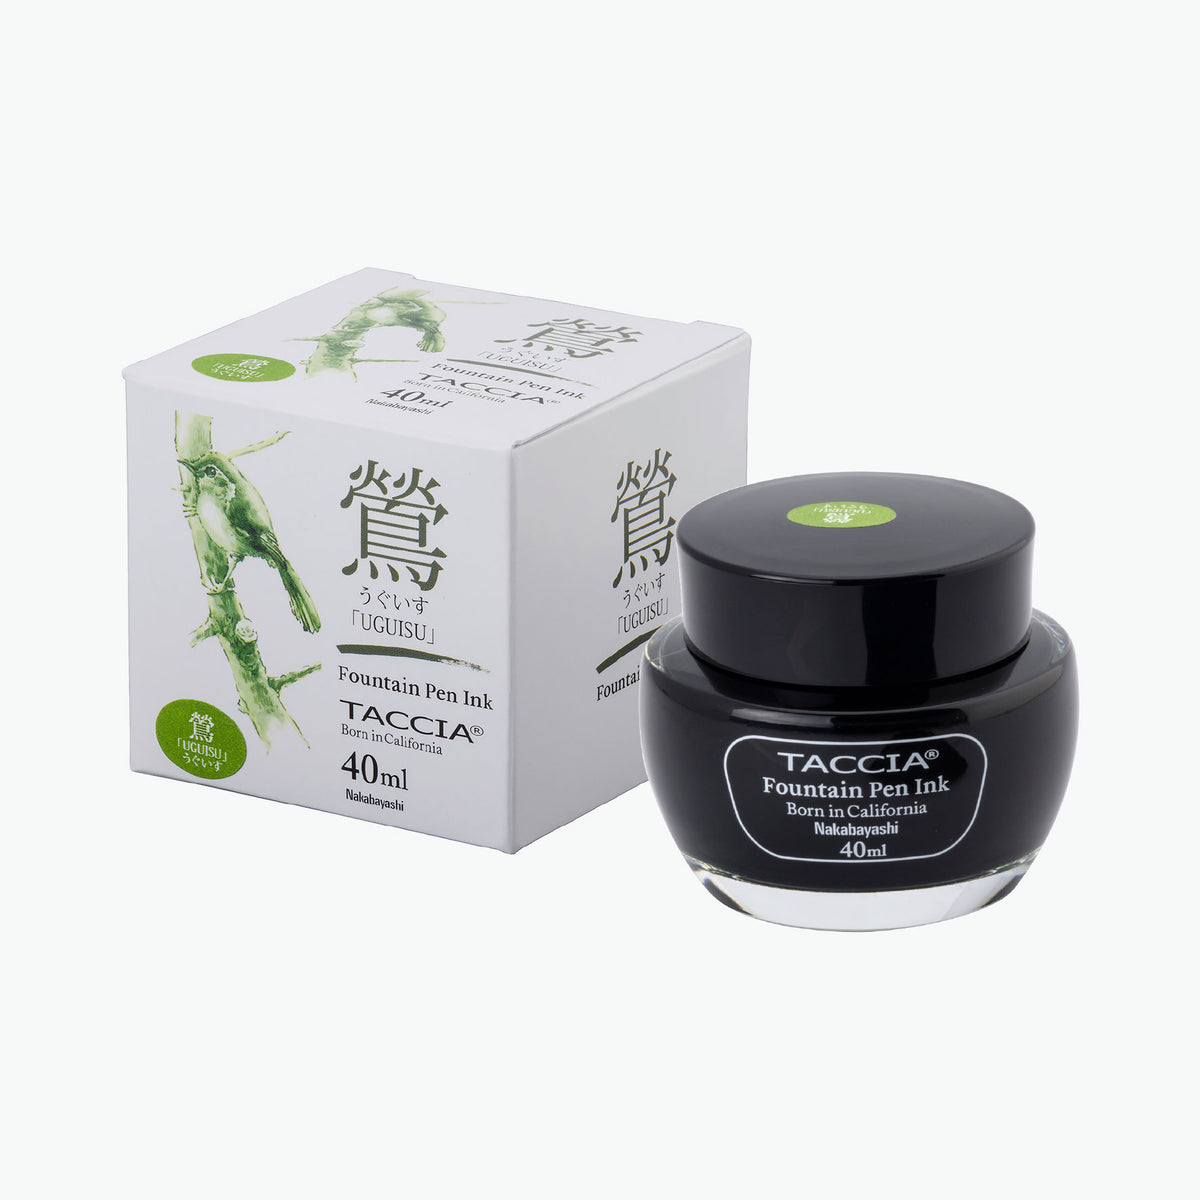 Taccia - Fountain Pen Ink - Standard - Uguisu (Olive Green)